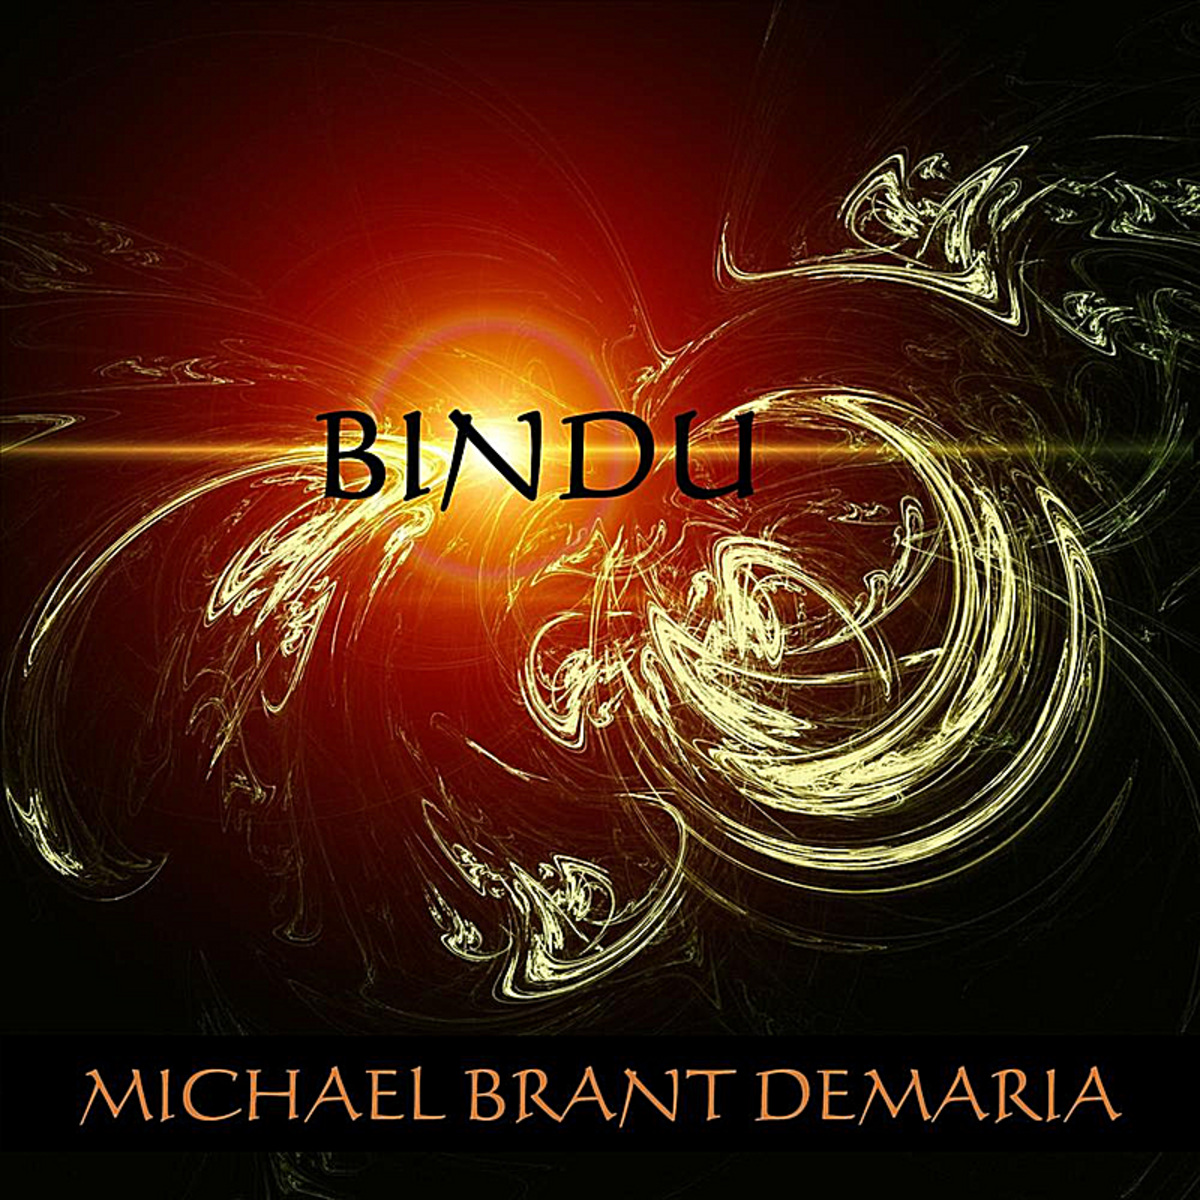 Cd Michael Brant DeMaria -Bindu Cover